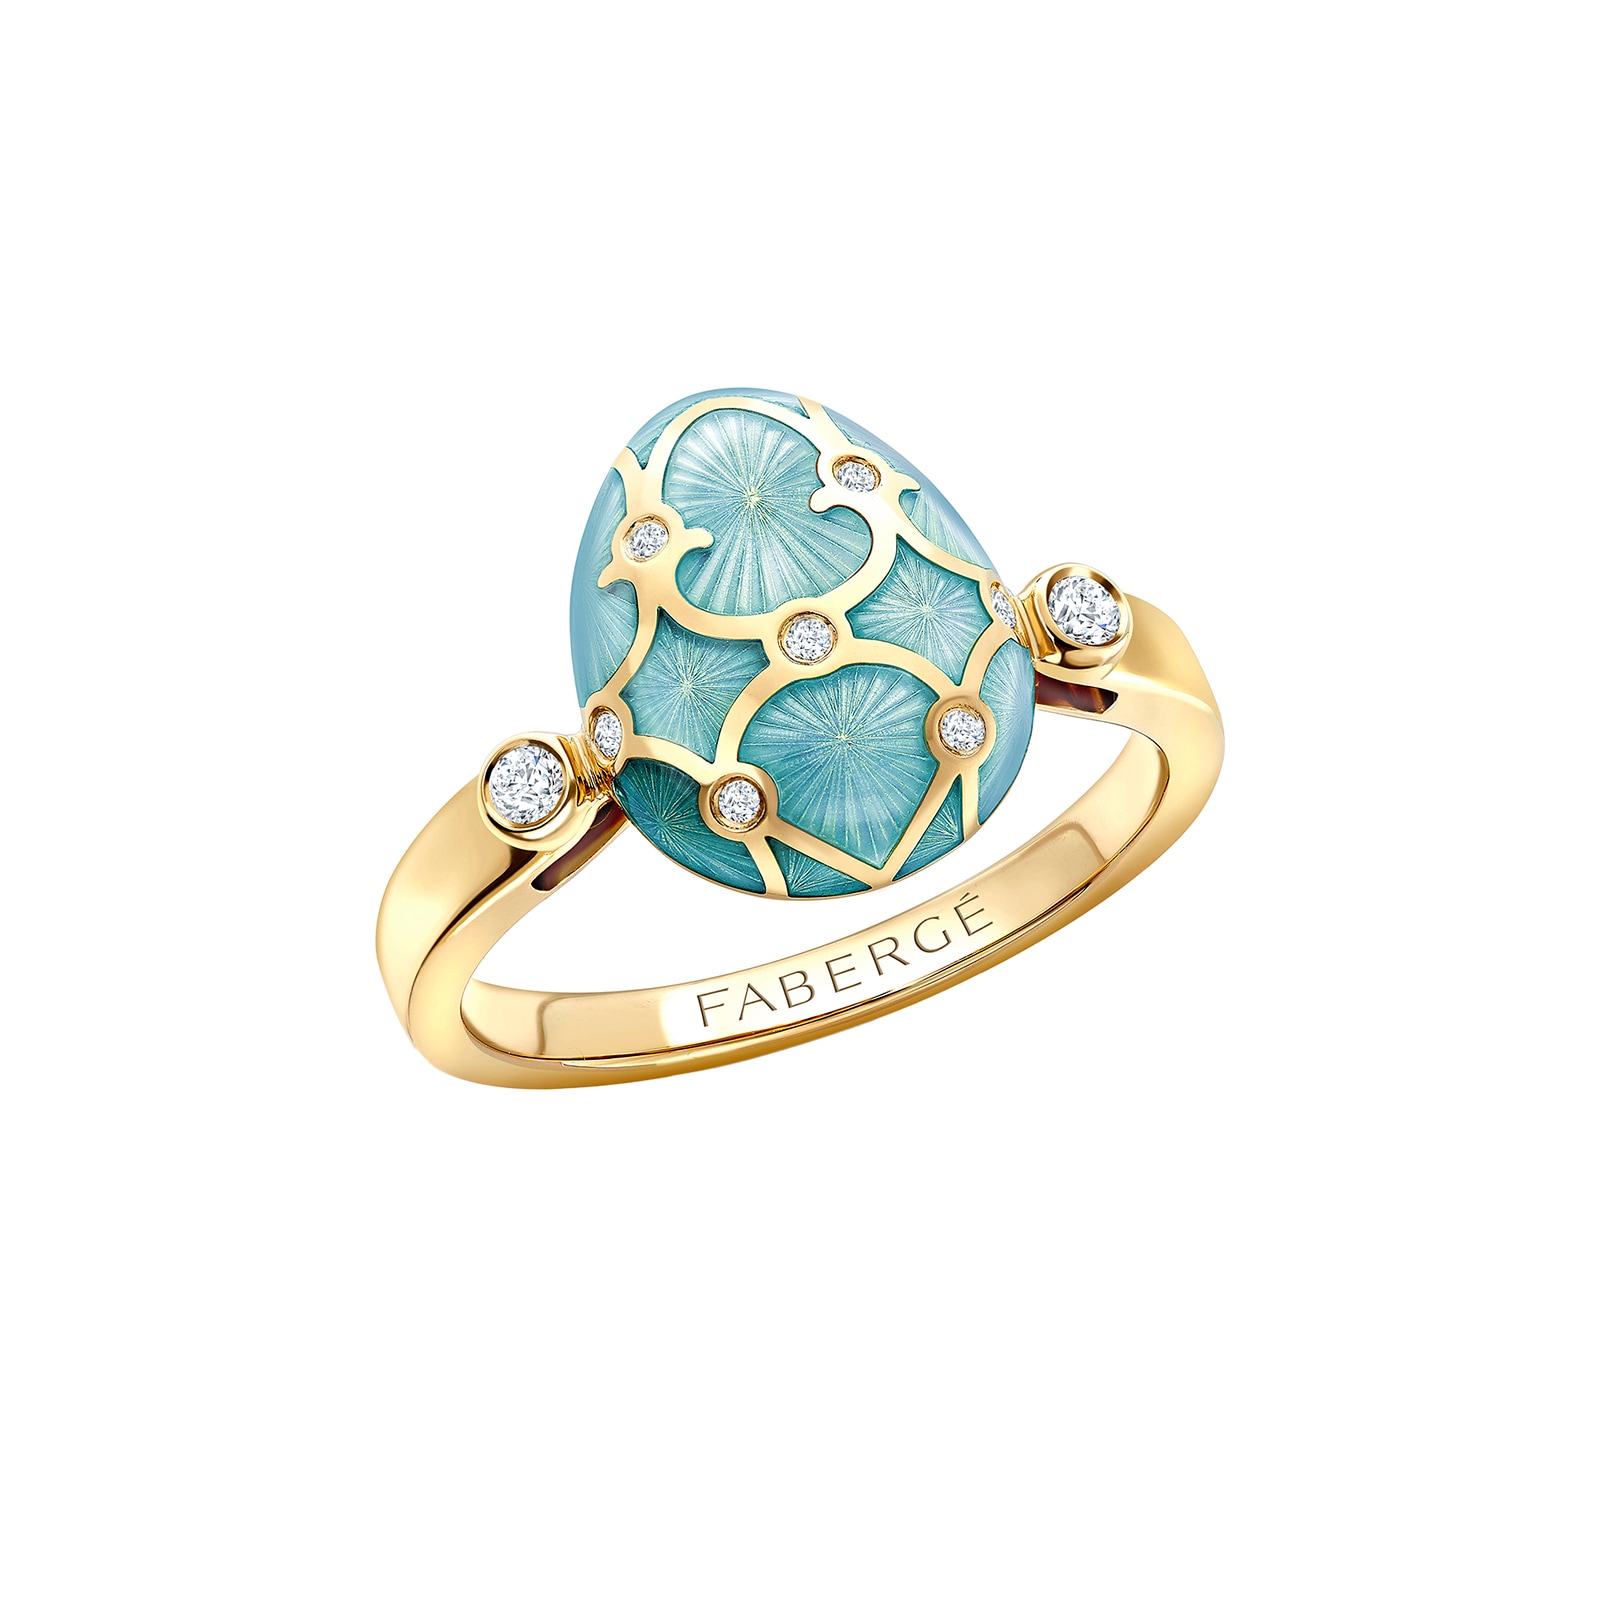 Heritage 18ct Yellow Gold Diamond & Tourquoise Enamel Egg Ring - Ring Size O